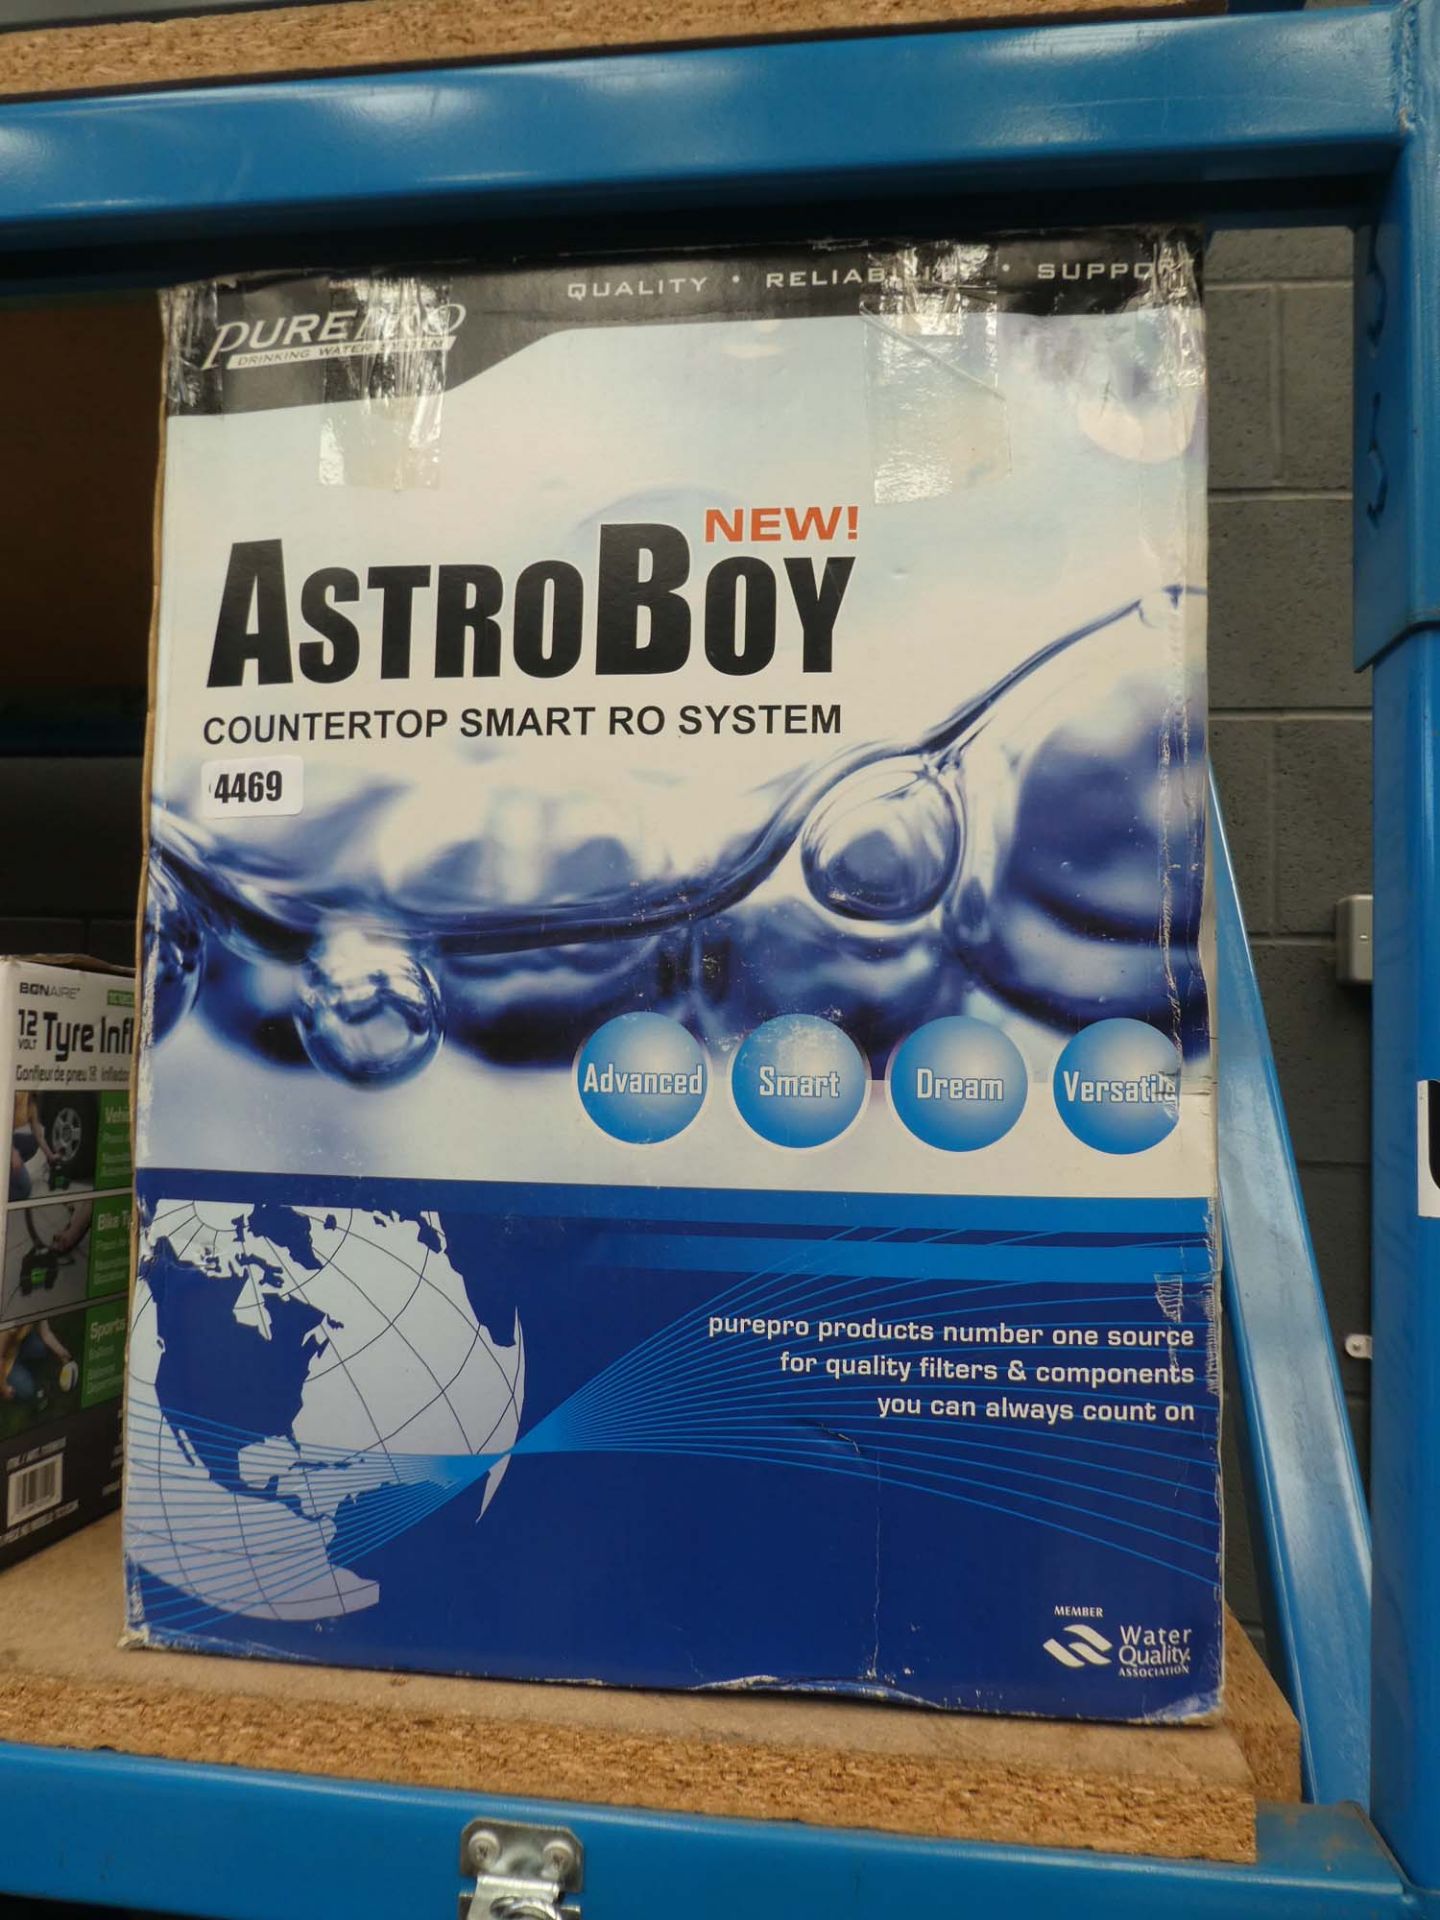 4517 Astroboy reverse osmosis water purifier